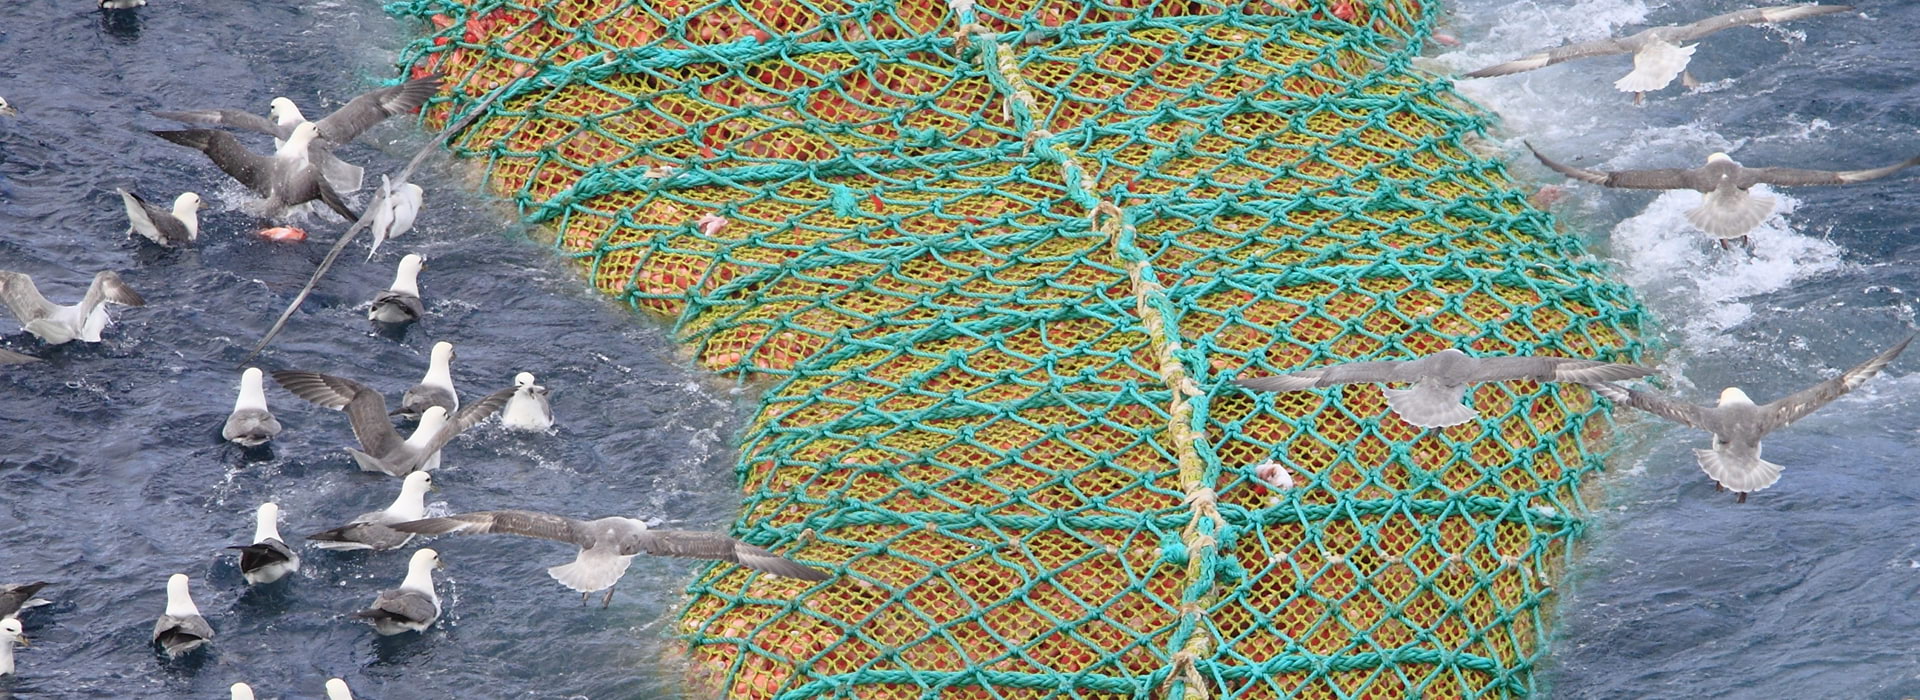 Pelagic Trawl Net an Effective Tool for Fishing at GTFL